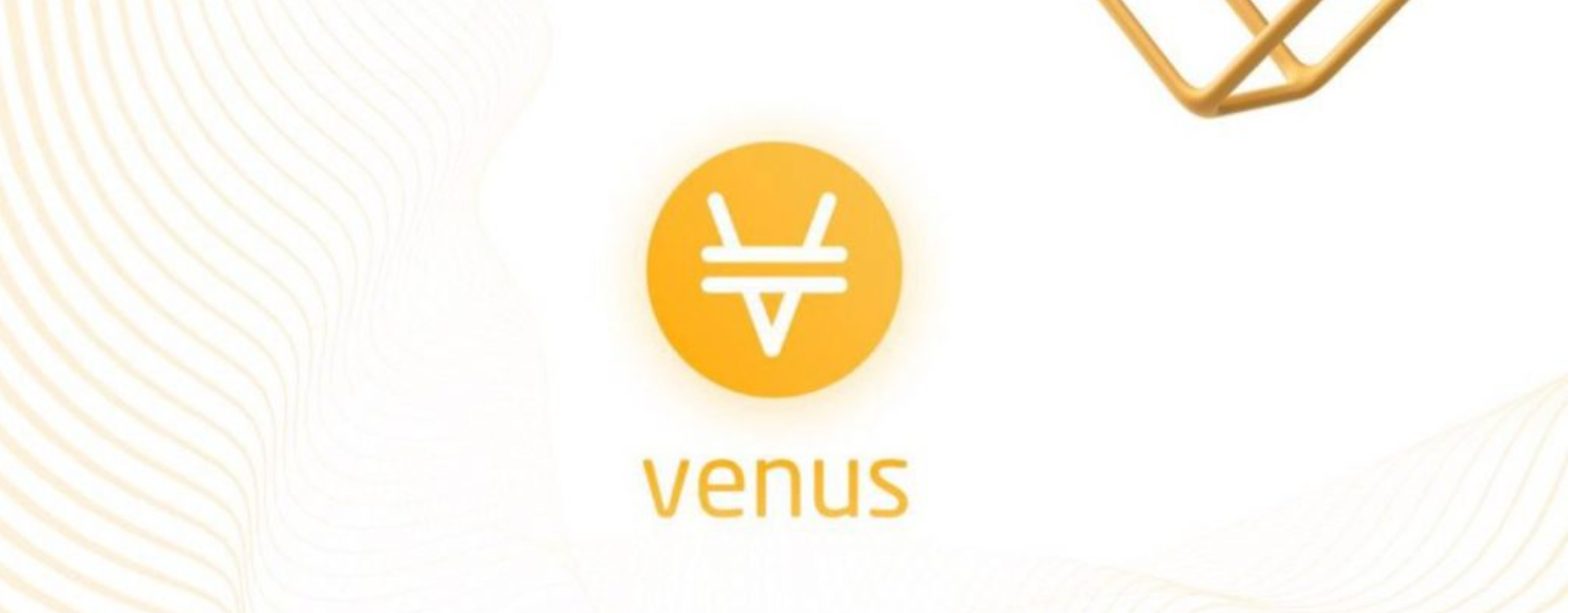 VenusProtocol